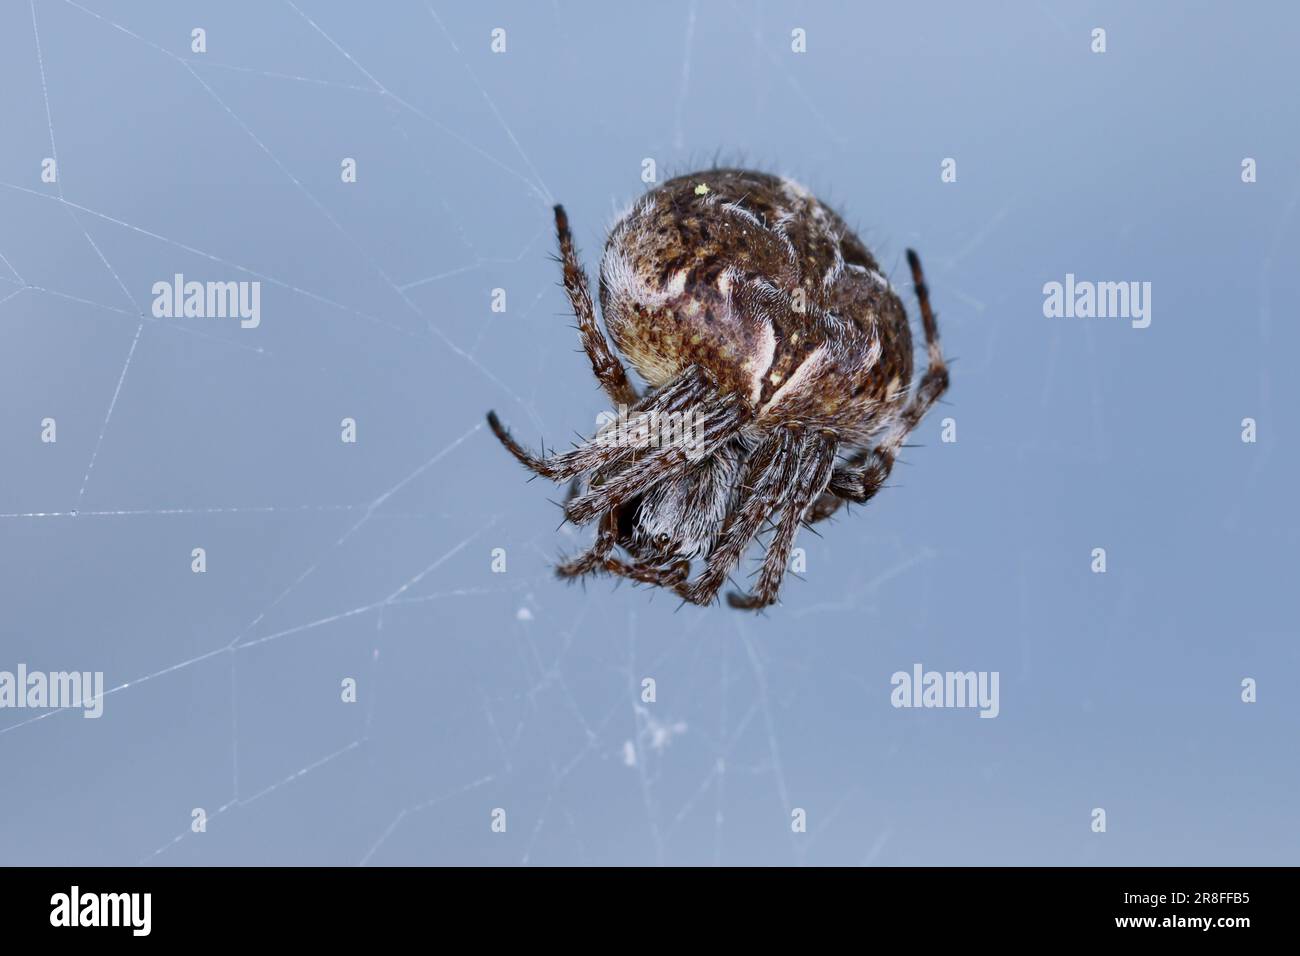 Körbchenspinne, Körbchen-Spinne, Agalenatea redii, Agalenatea redi, ginestre orbweaver, Echte Radnetzspinnen, Araneidae, Araneae Foto Stock